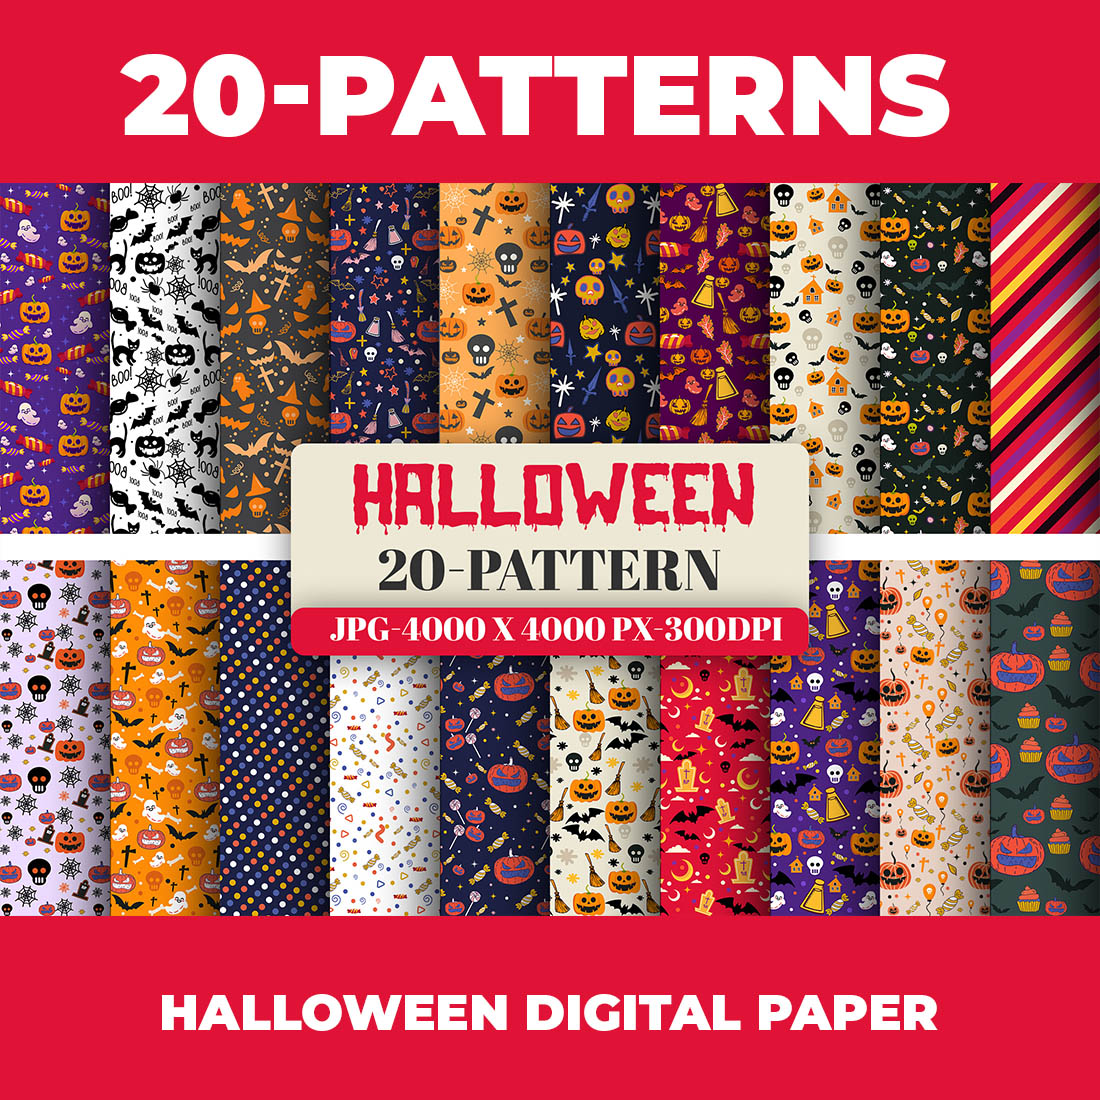 Halloween Digital Paper Pattern Bundle cover image.